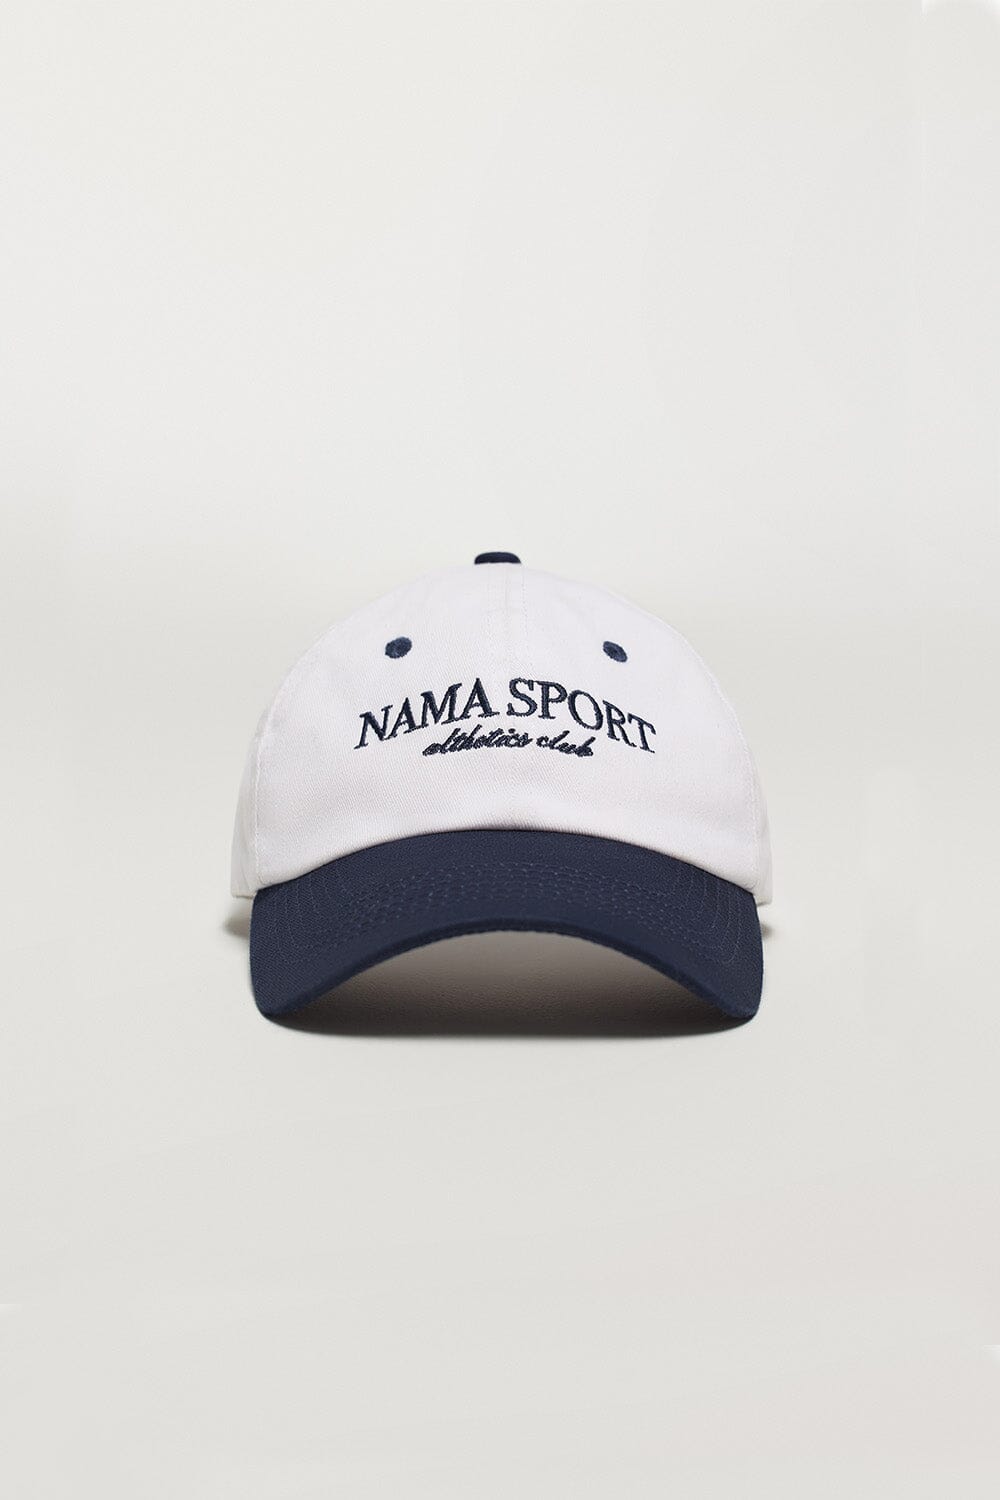 Nama Sport Hat